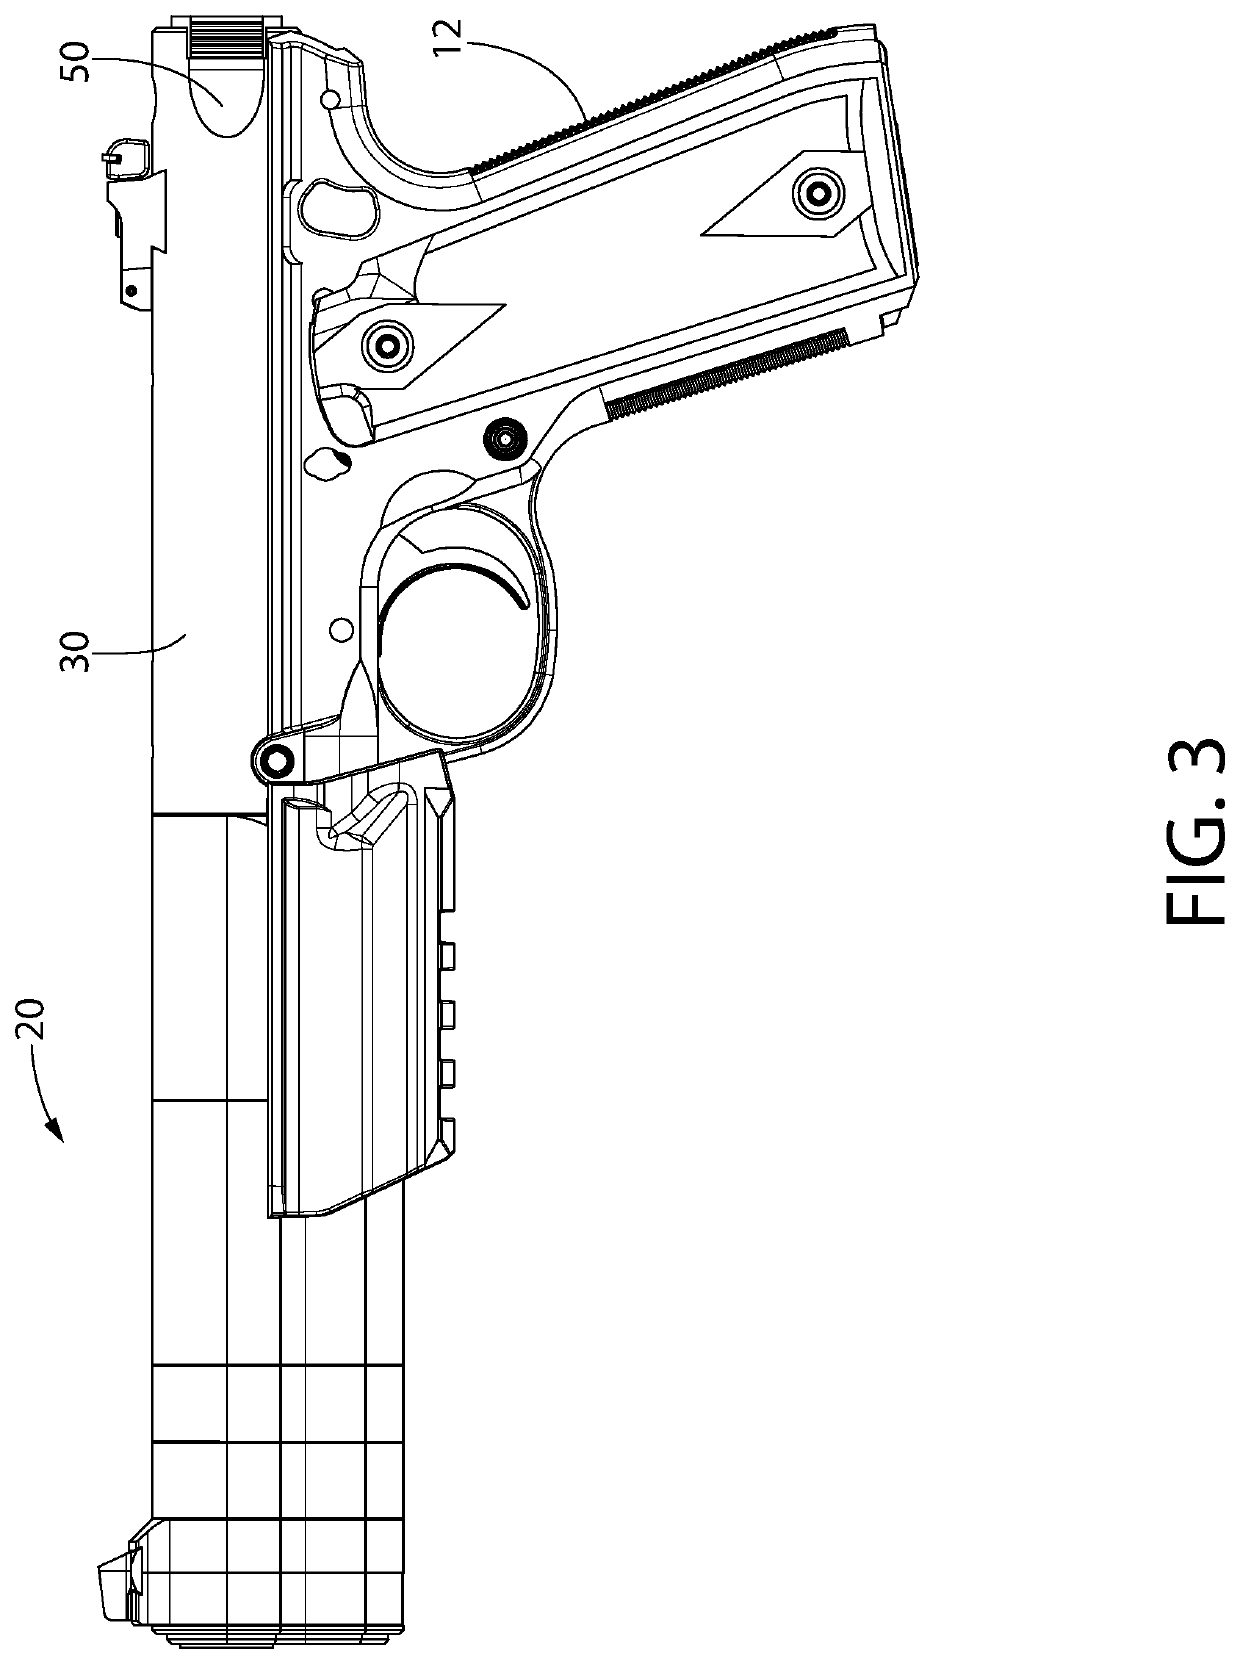 Integrally suppressed handgun